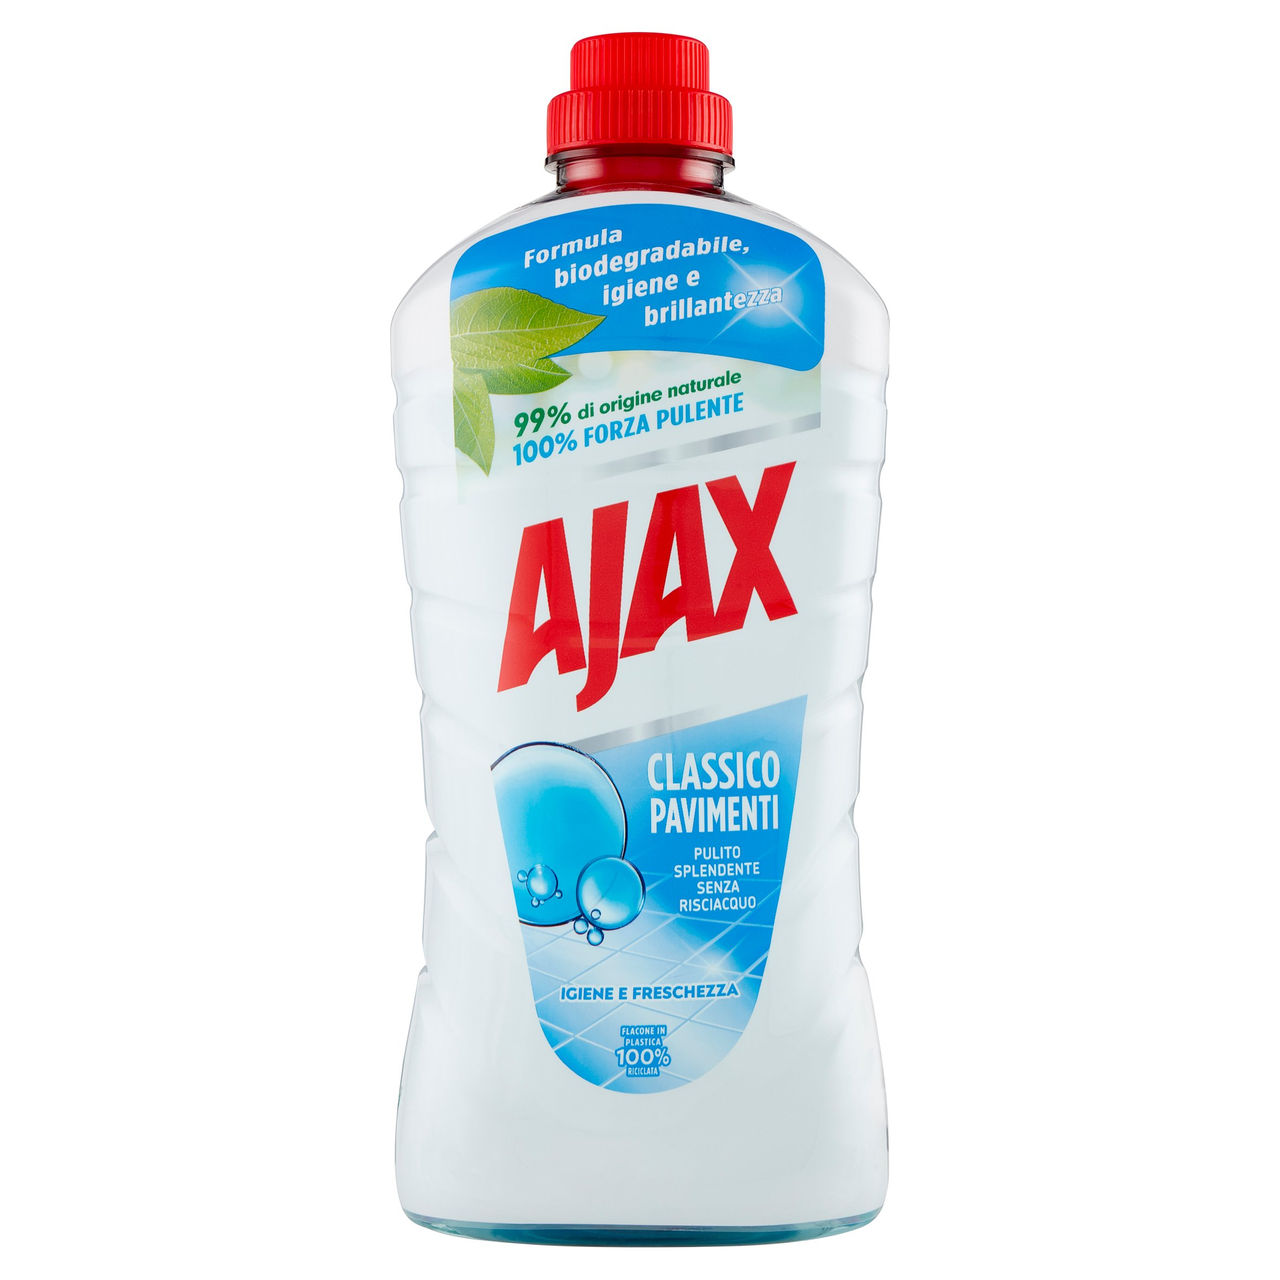 Ajax detersivo pavimenti in vendita online